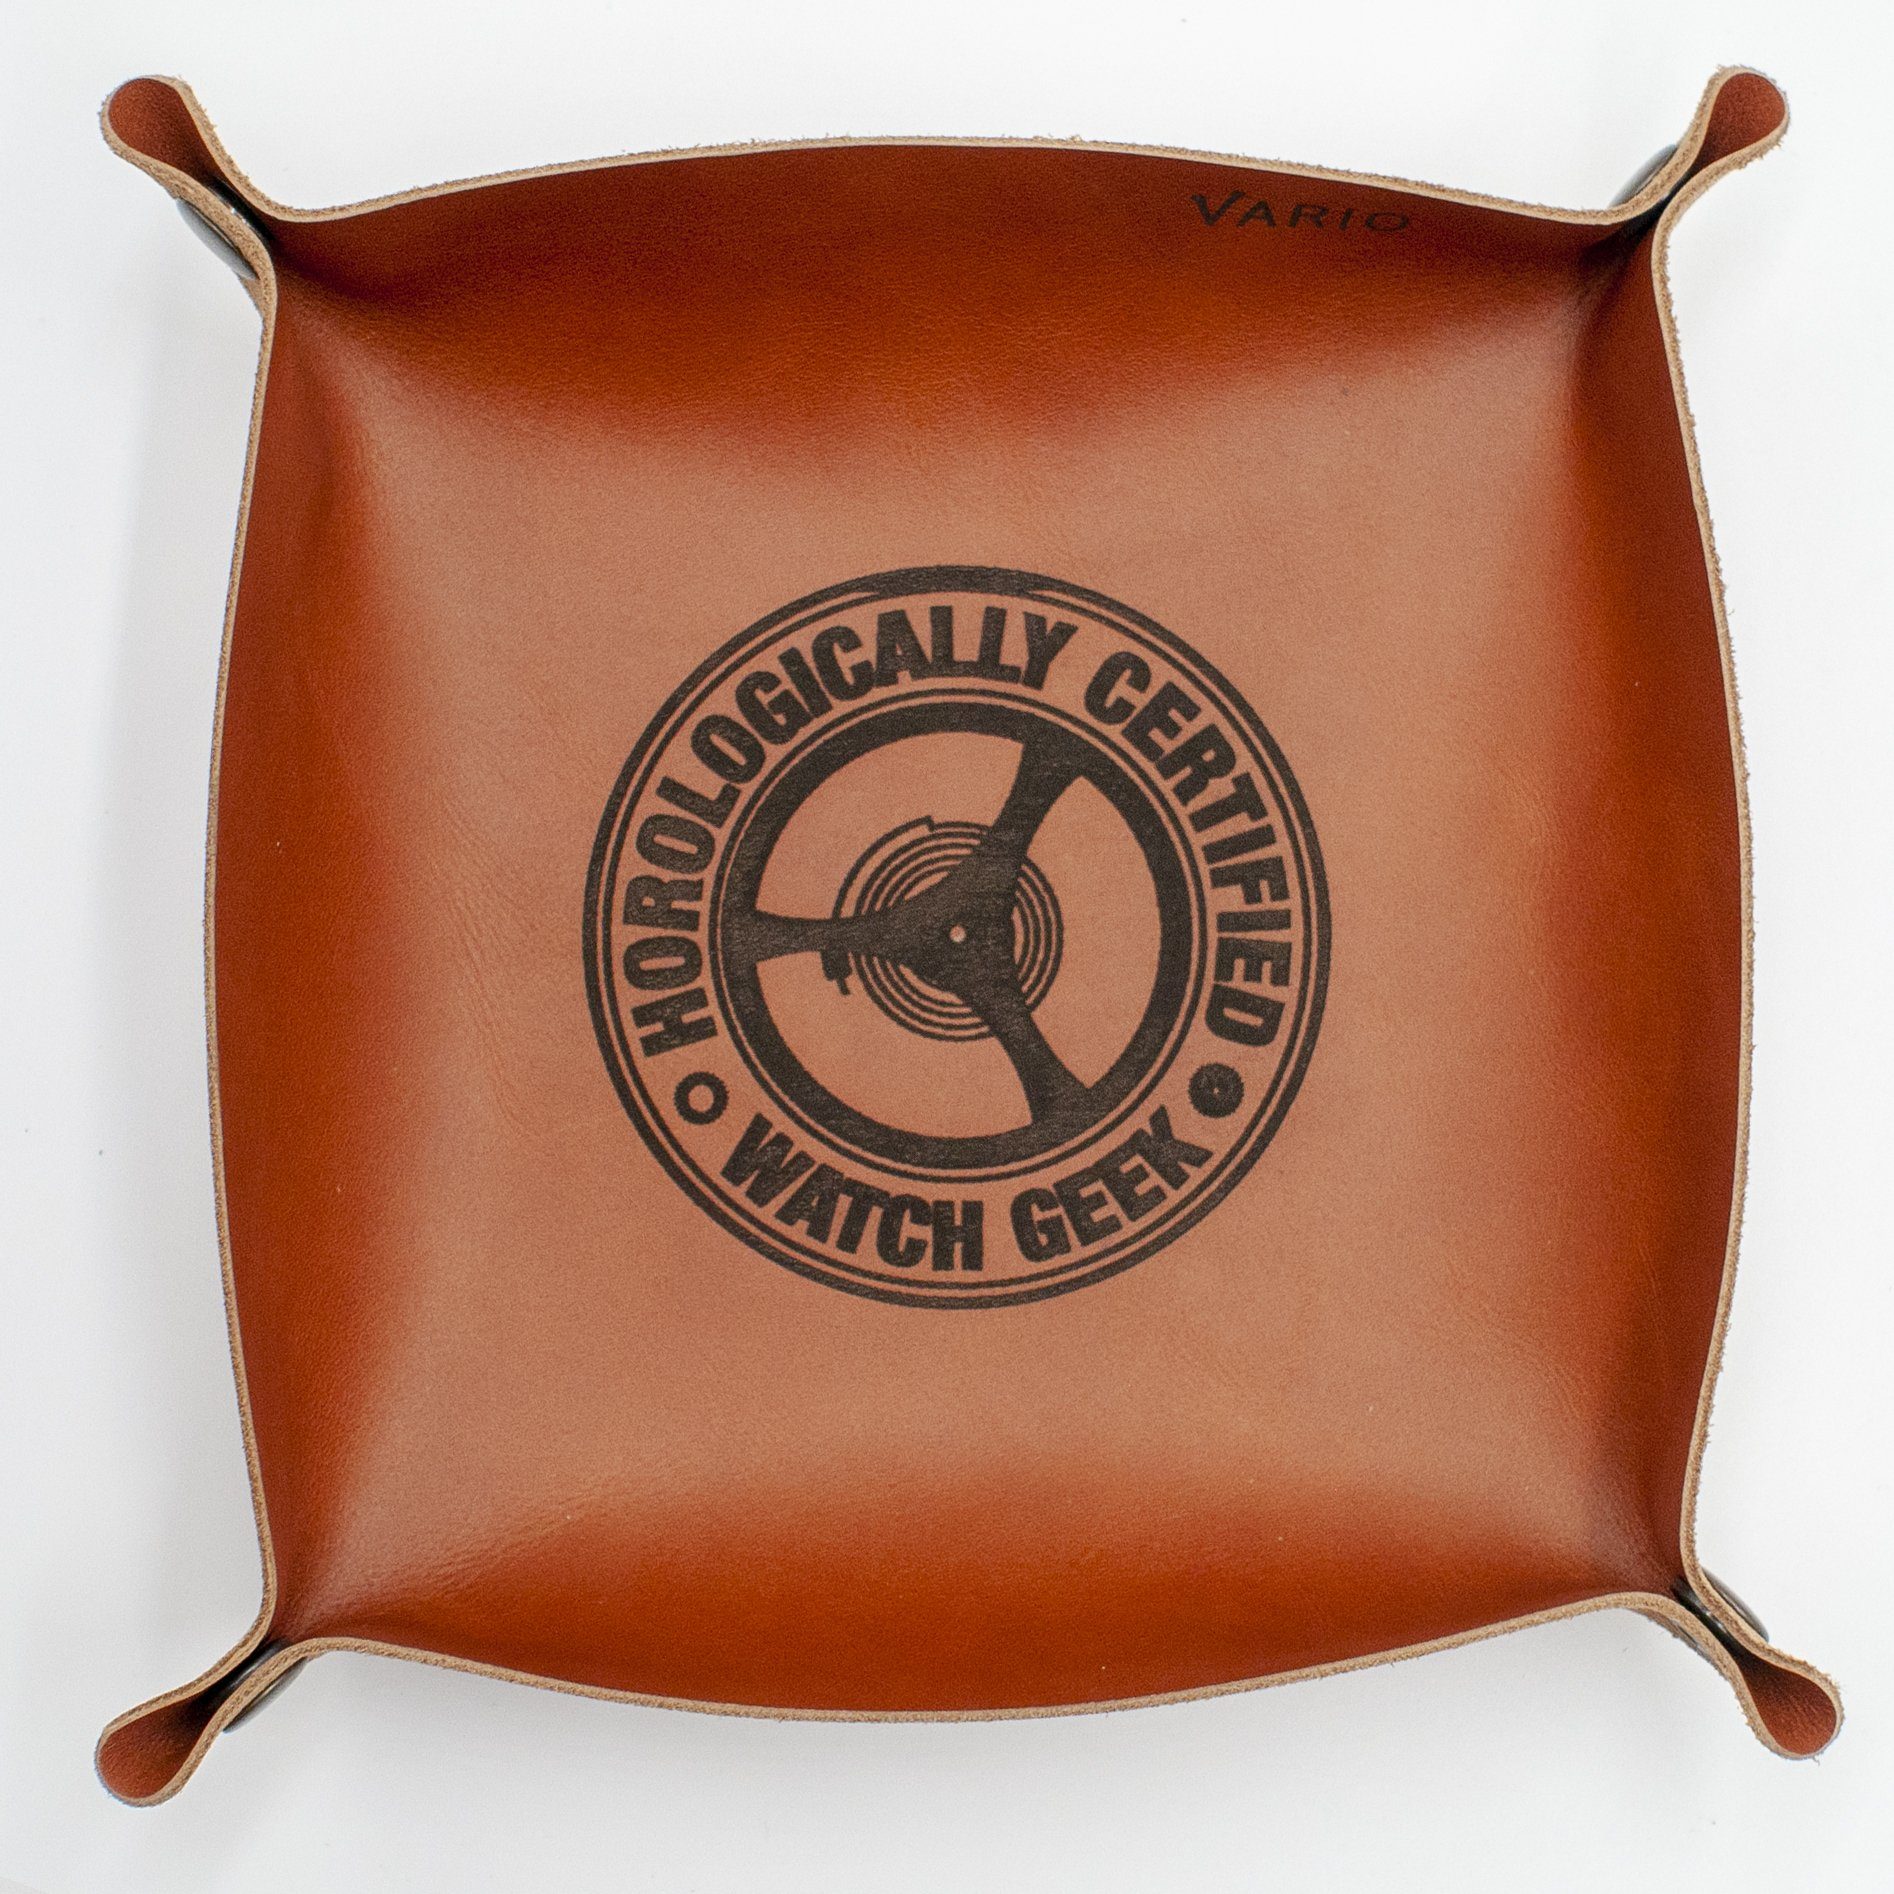 Belarusian Caramel Brown Leather Valet Tray (Certified Watch Geek) for Watch, Keys, Accessories